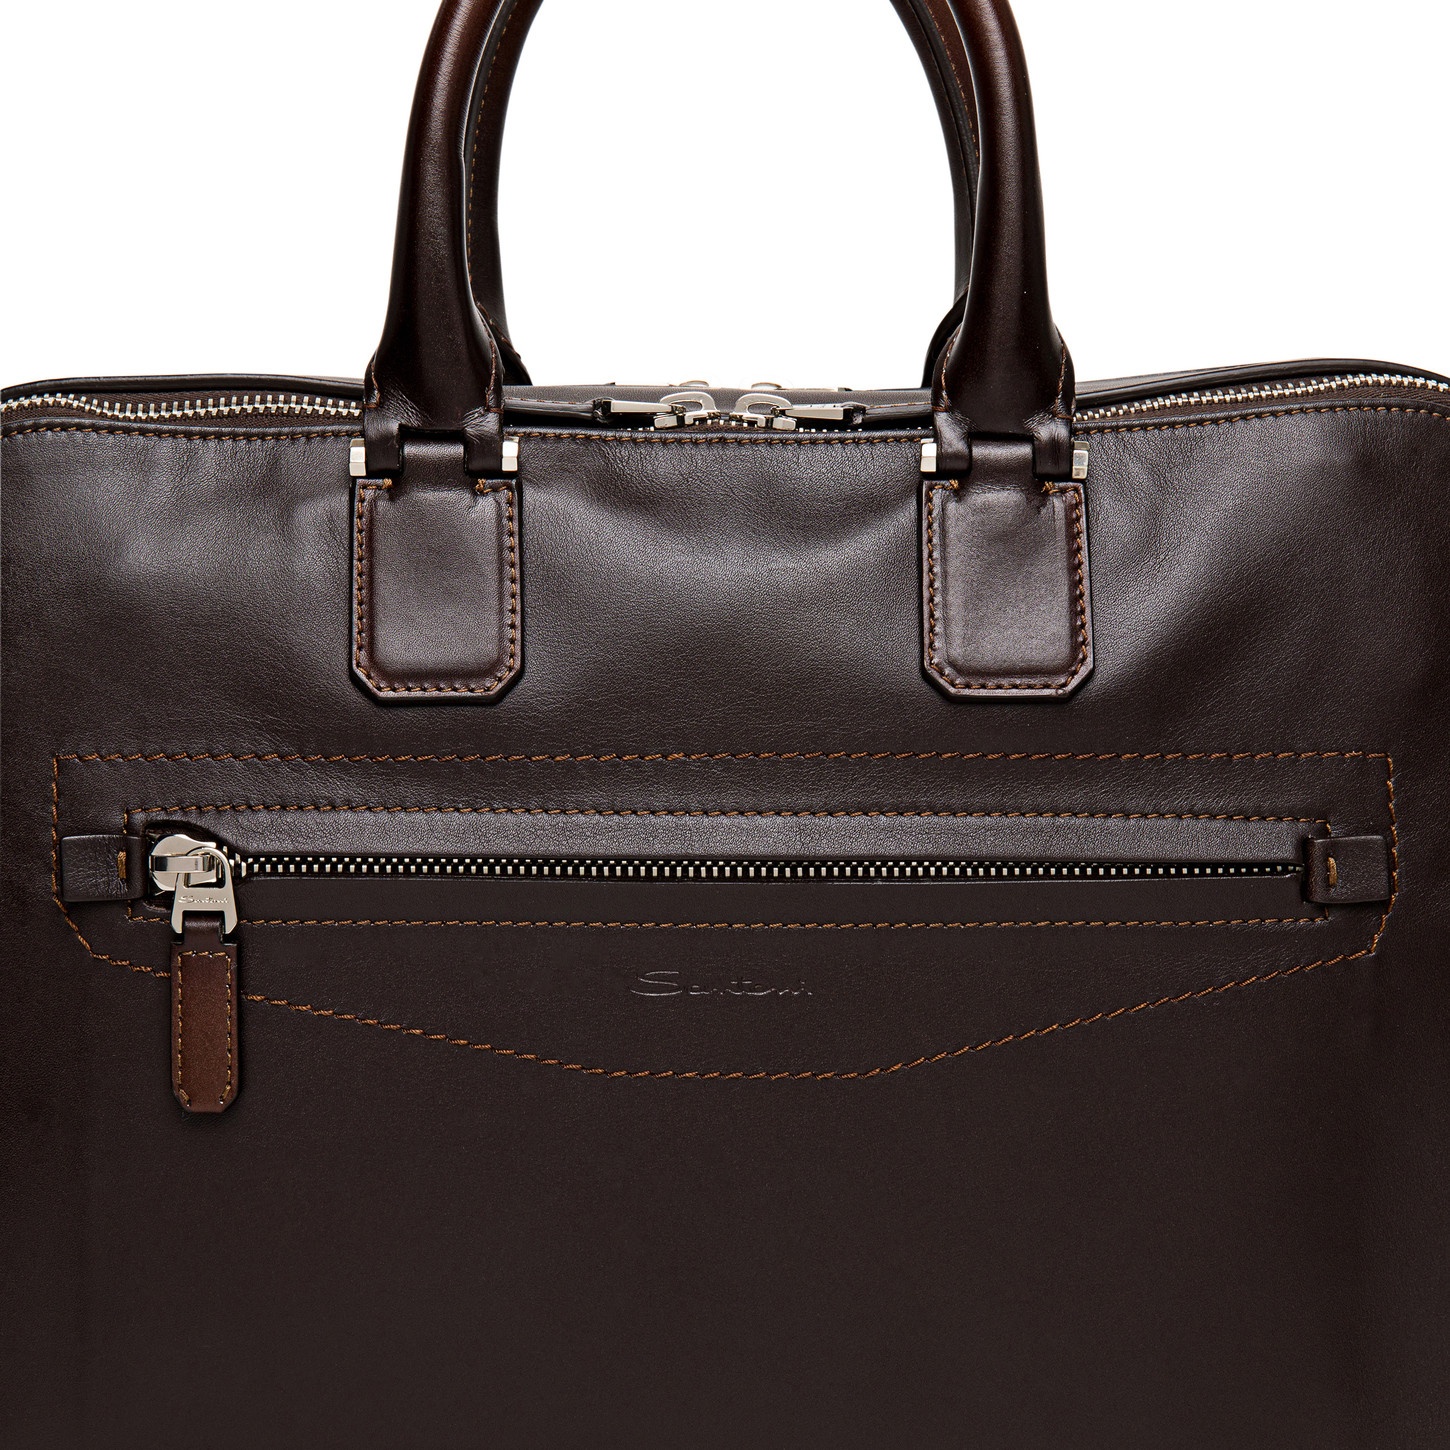 Brown leather laptop bag - 3